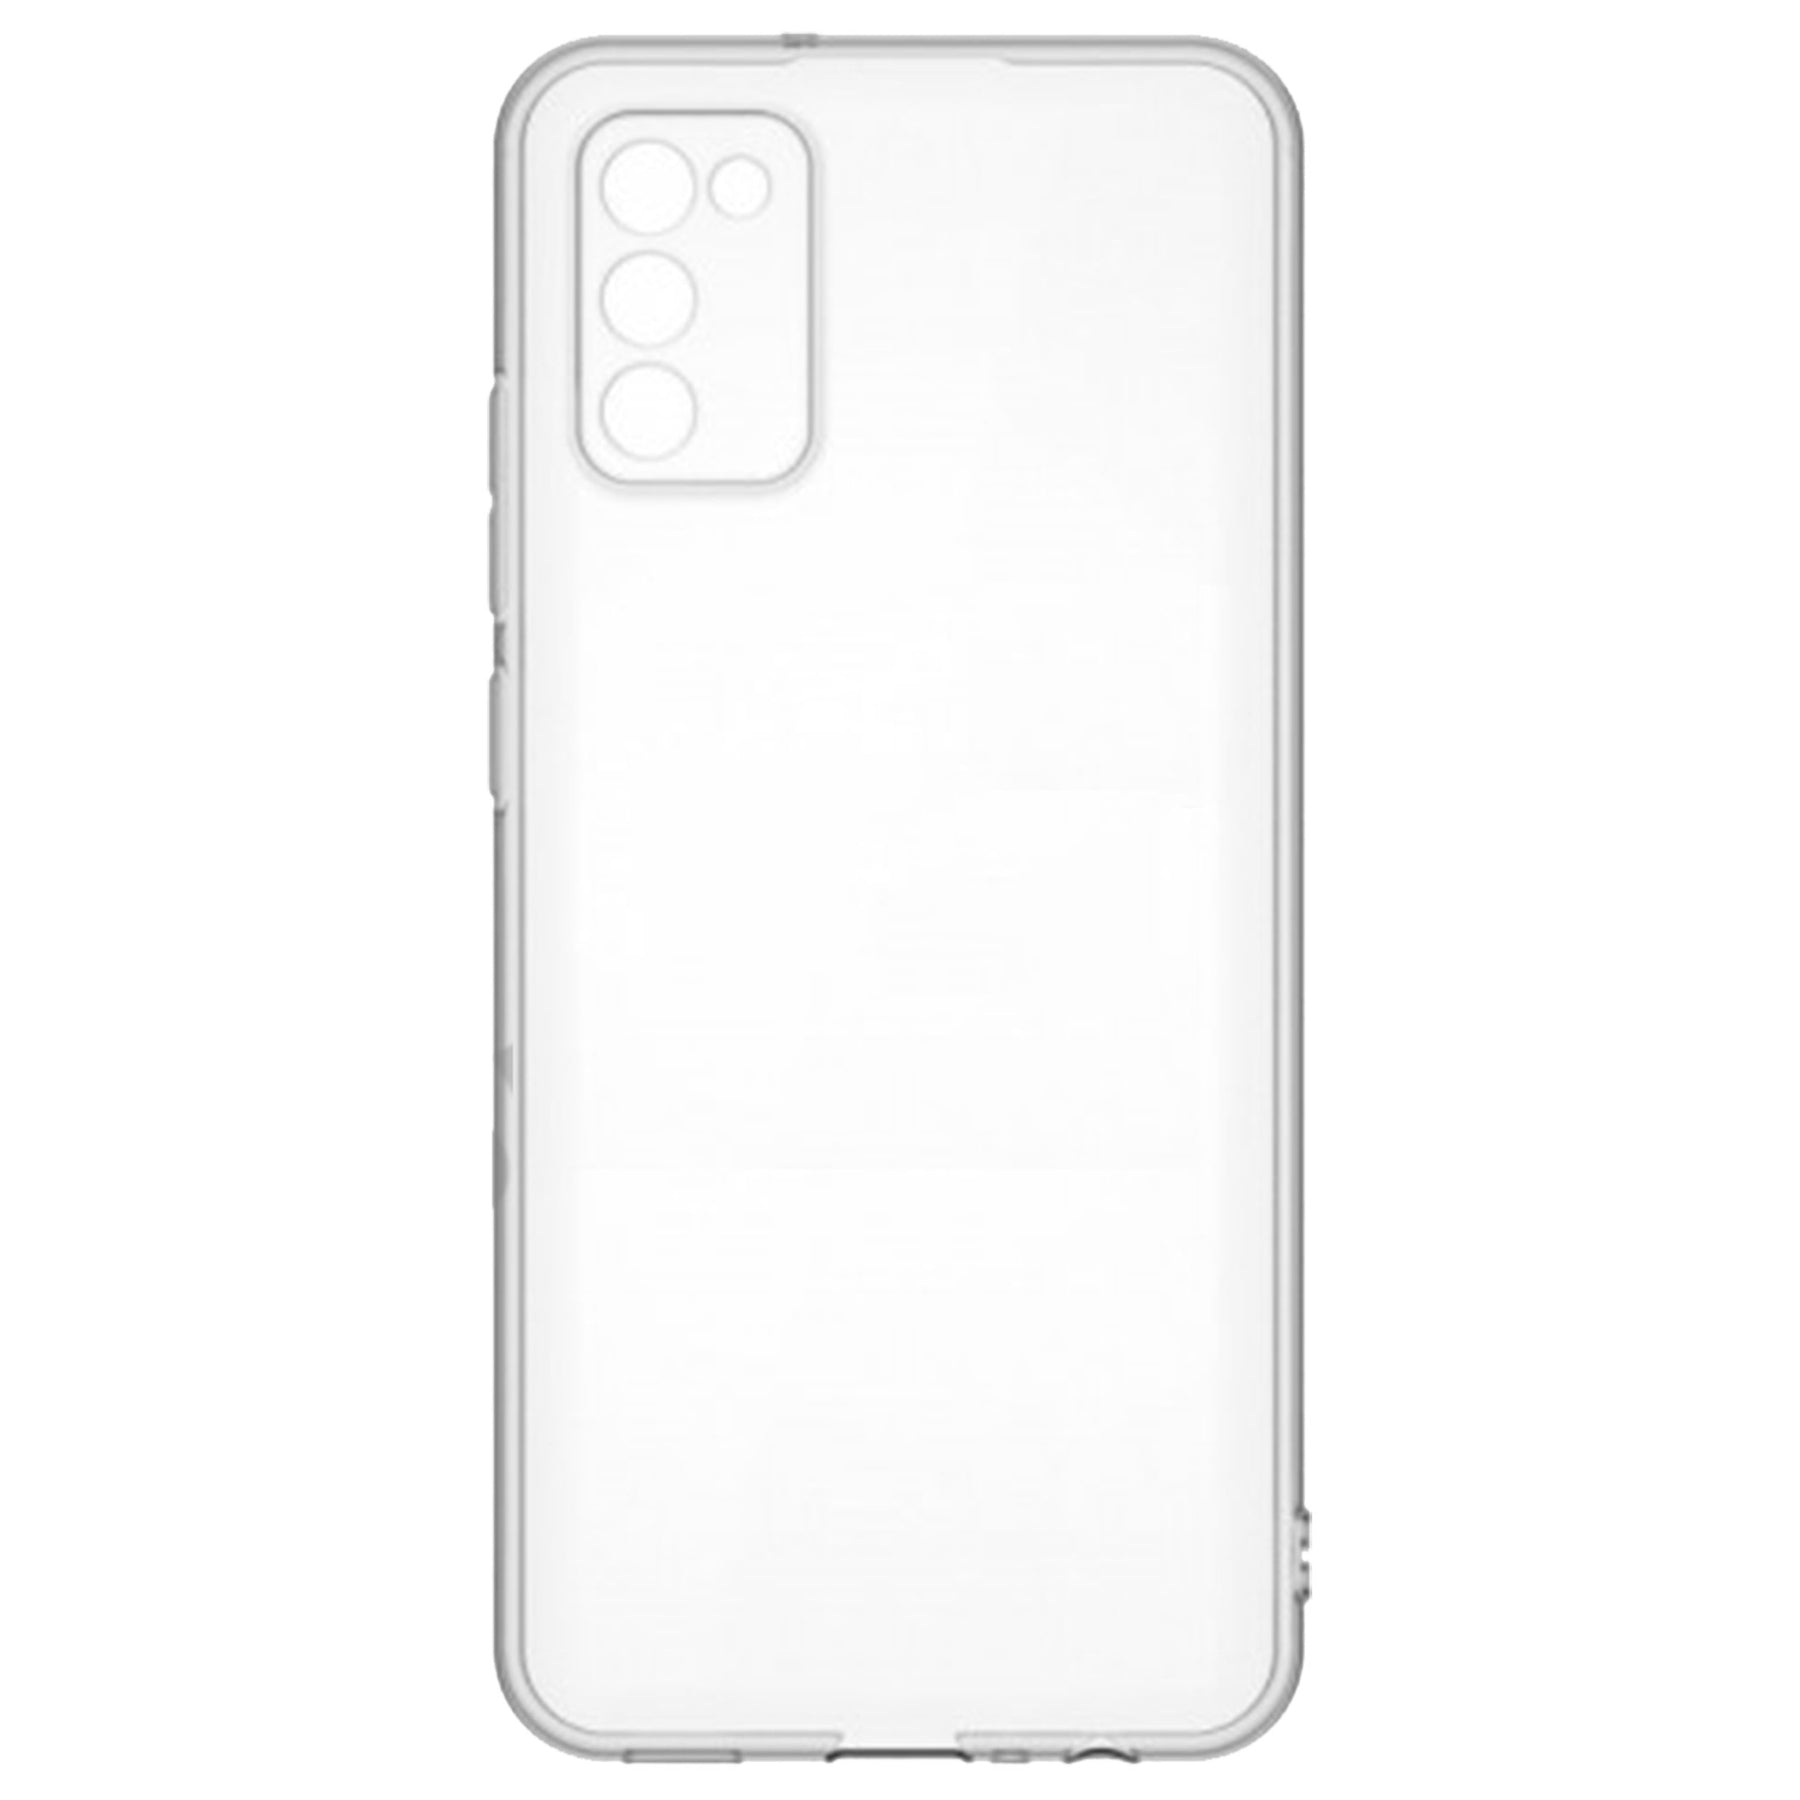 Samsung A02s/A03s clear case